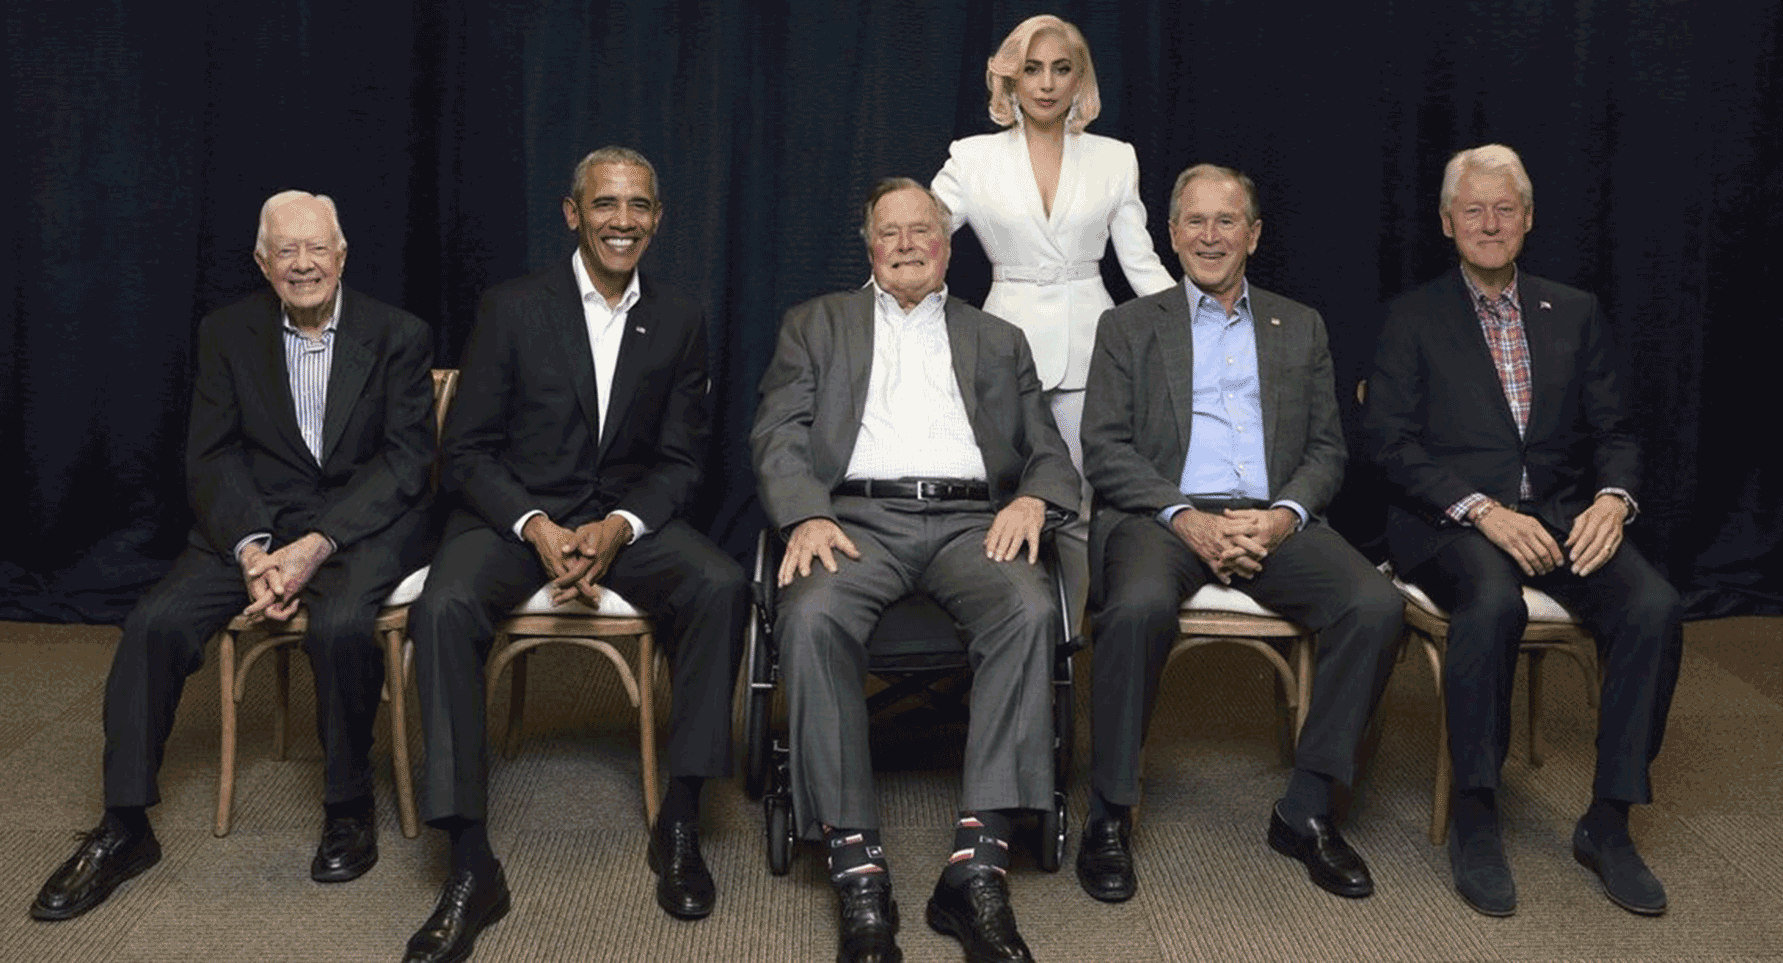 Lady Gaga and the Ex-US-Presidents, photo: https://twitter.com/ladygaga/status/921921998875439105/photo/1